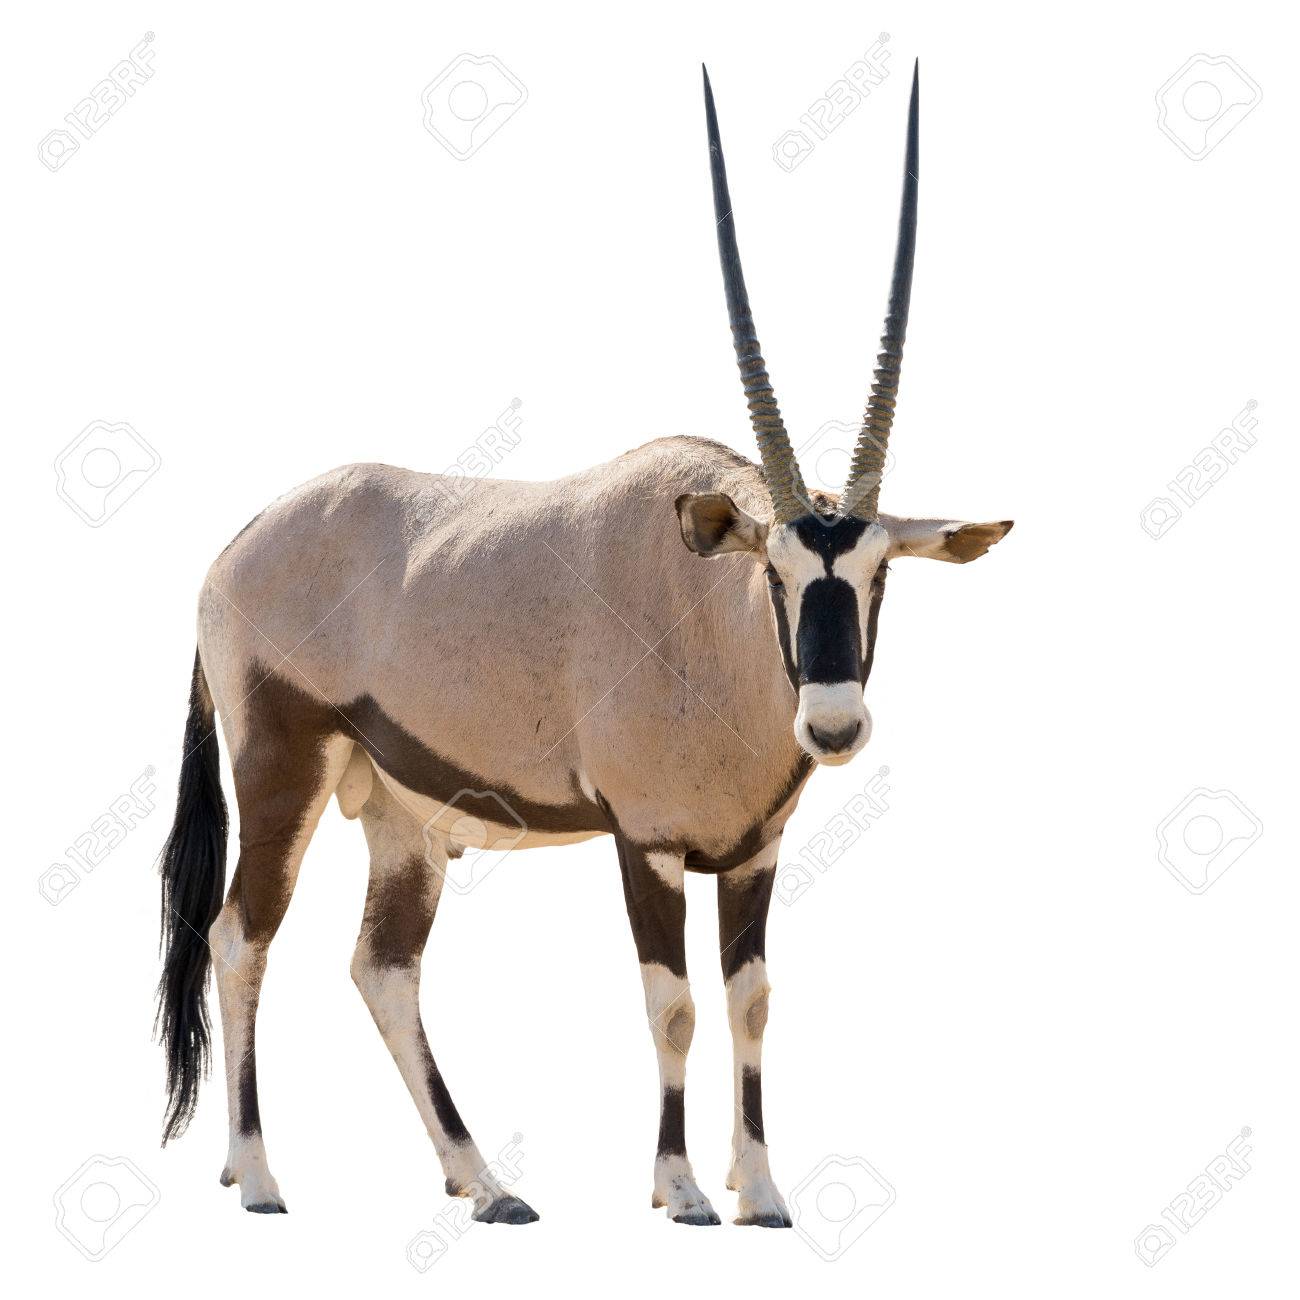 Oryx Gazella Gemsbok Looking Into Cam Isolated On White